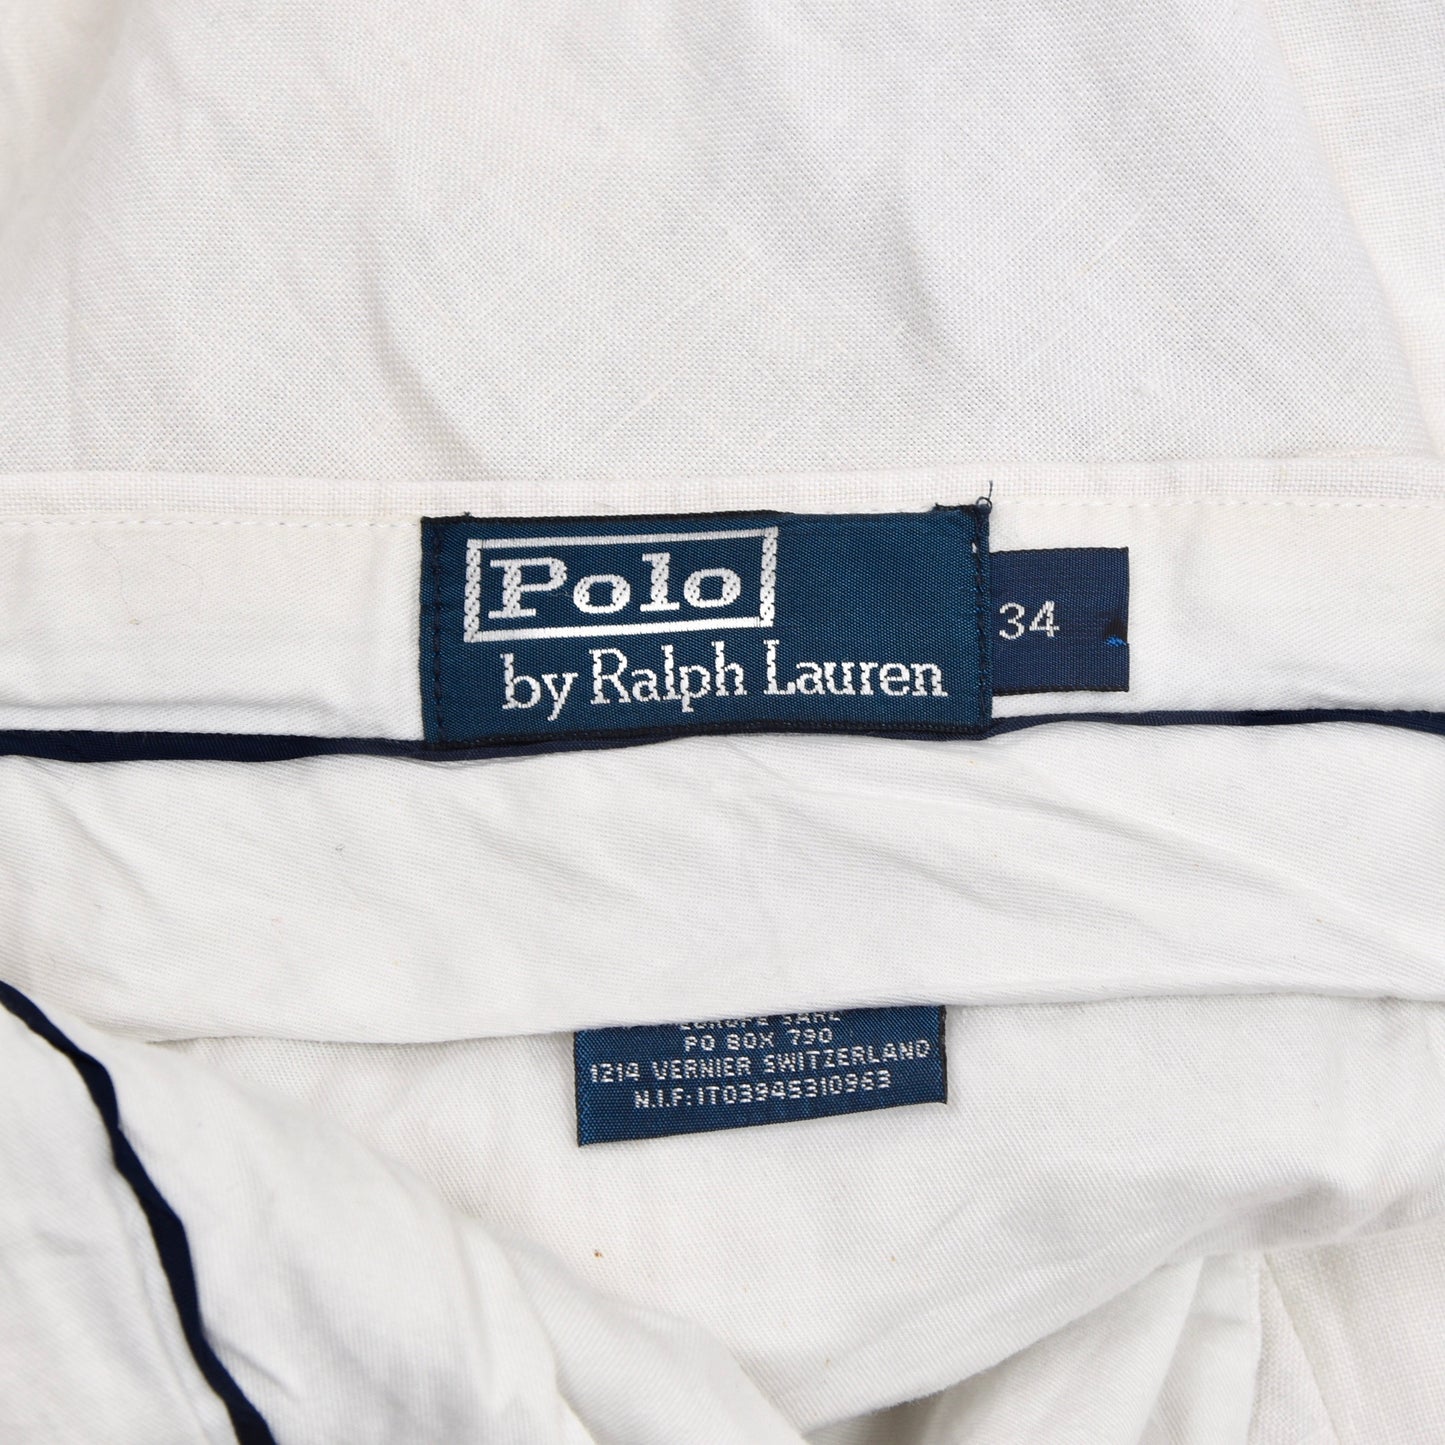 Polo Ralph Lauren 100% Linen Pants Size 34 - White